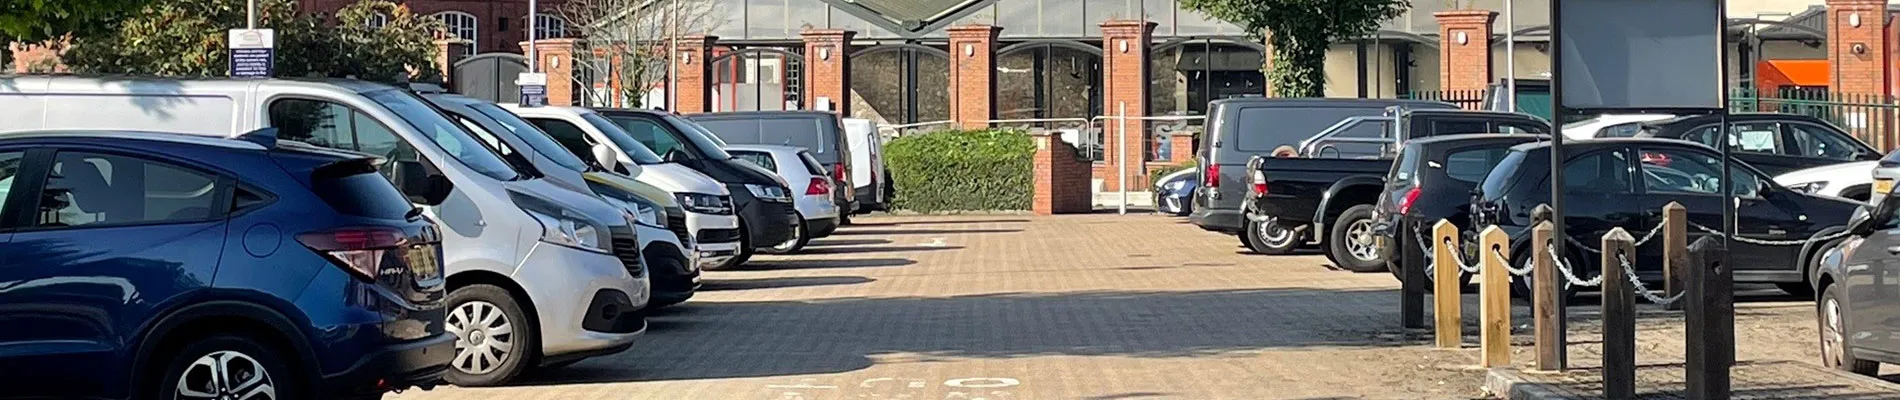 Parking at Bristol image